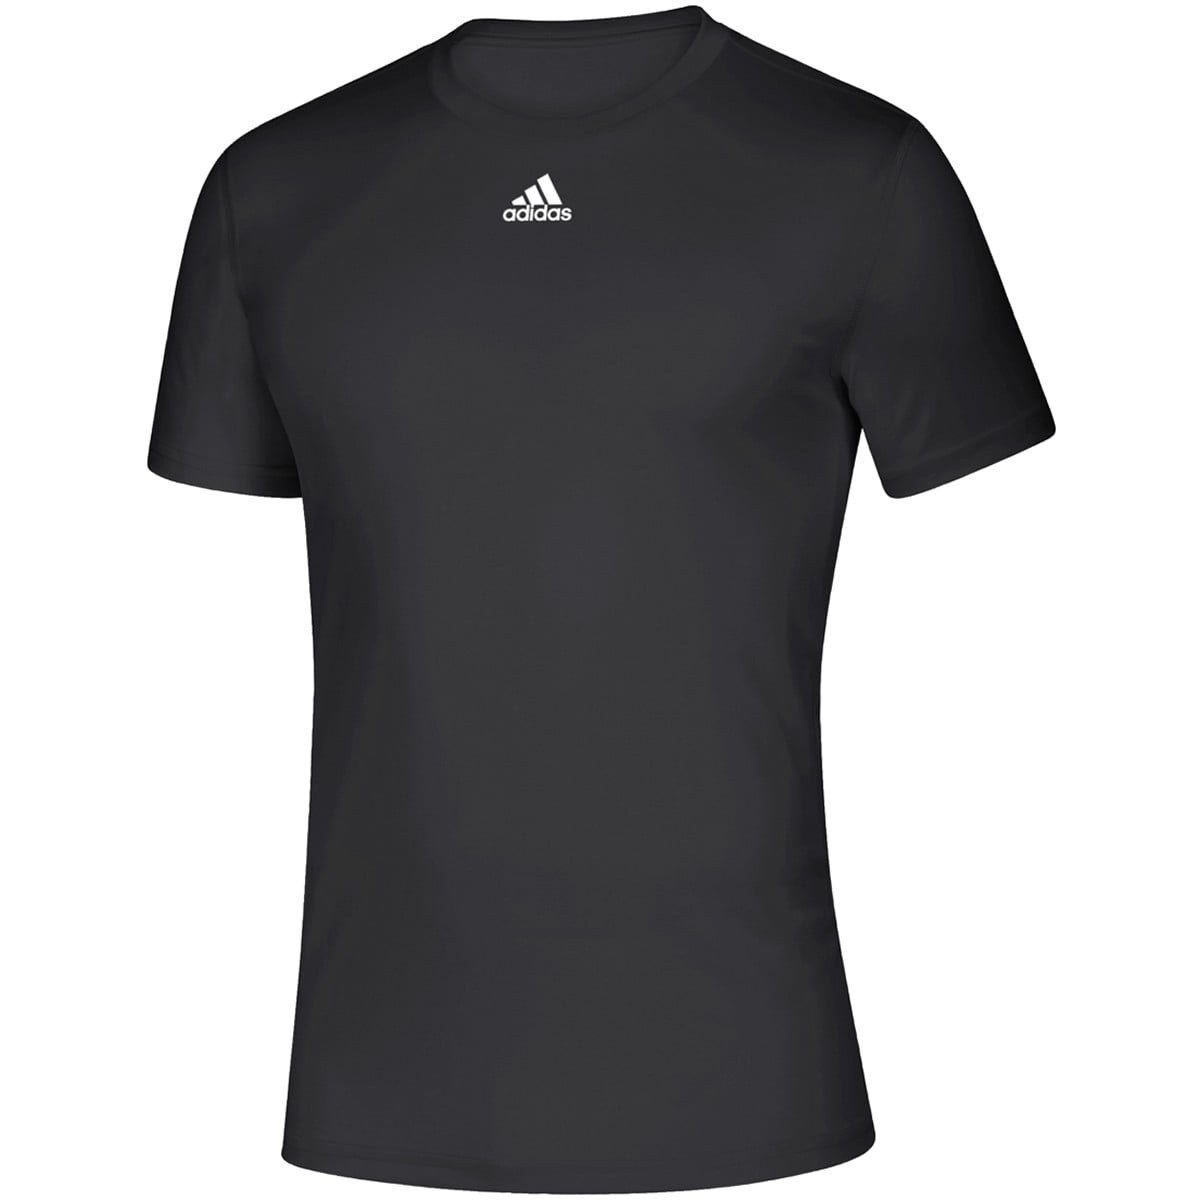 Men's Adidas Creator SS T Shirt Black - Walmart.com